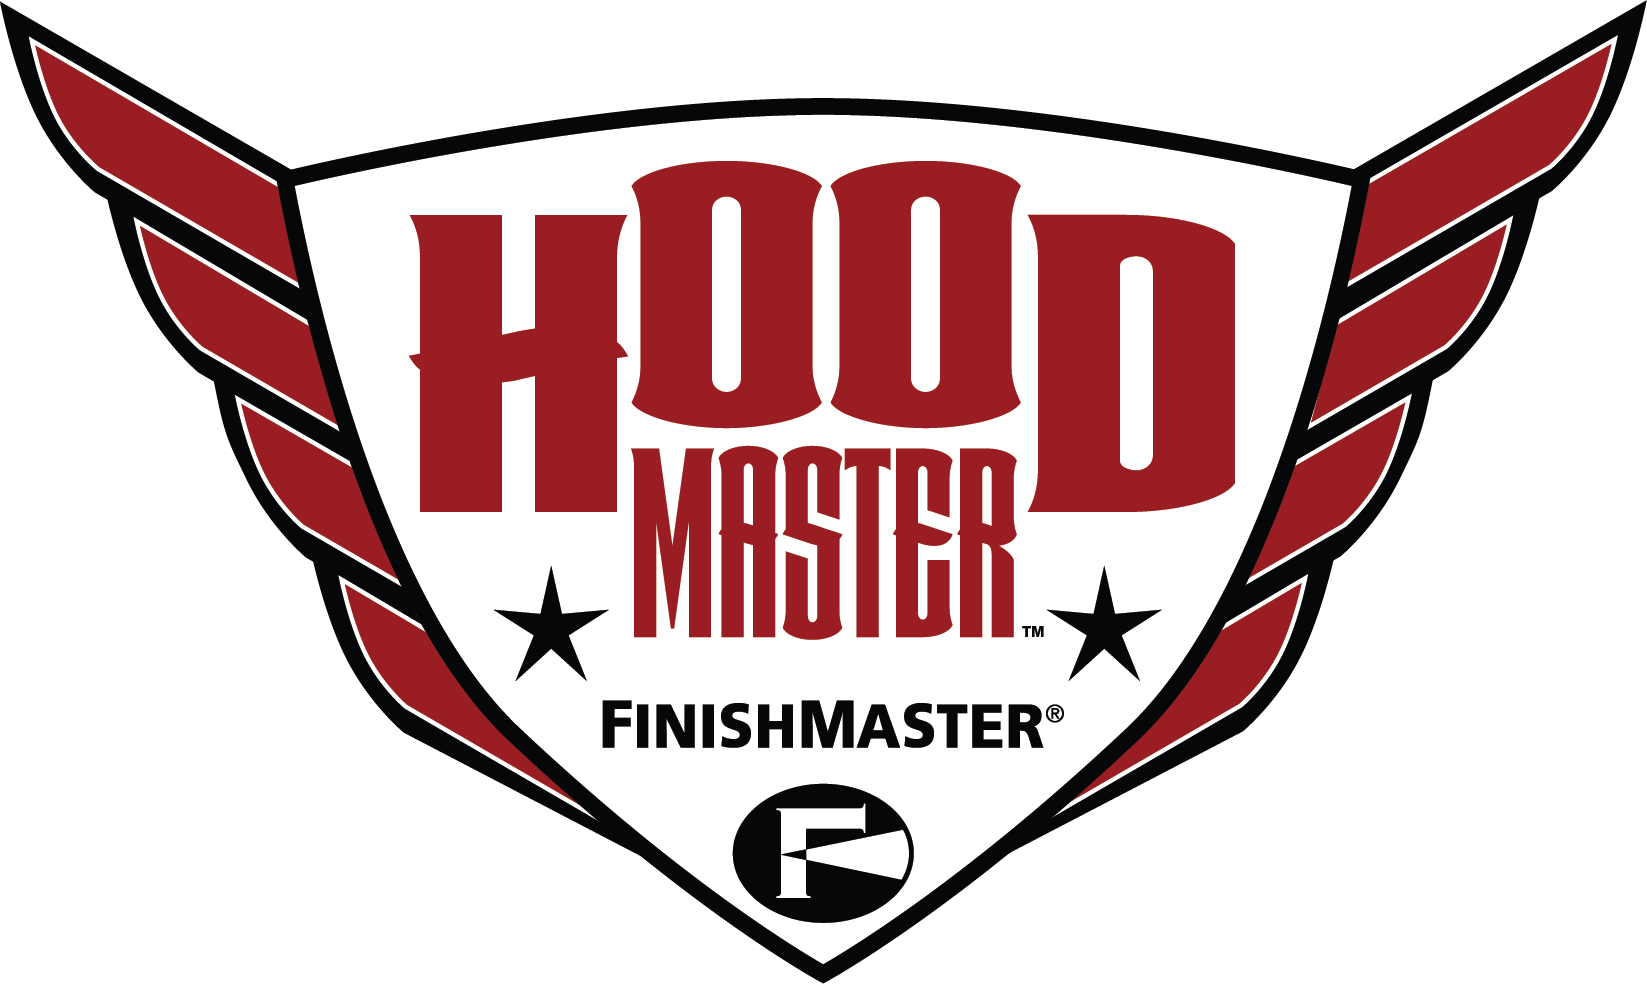 2022 Hood Master Challenge Logo from FinishMaster